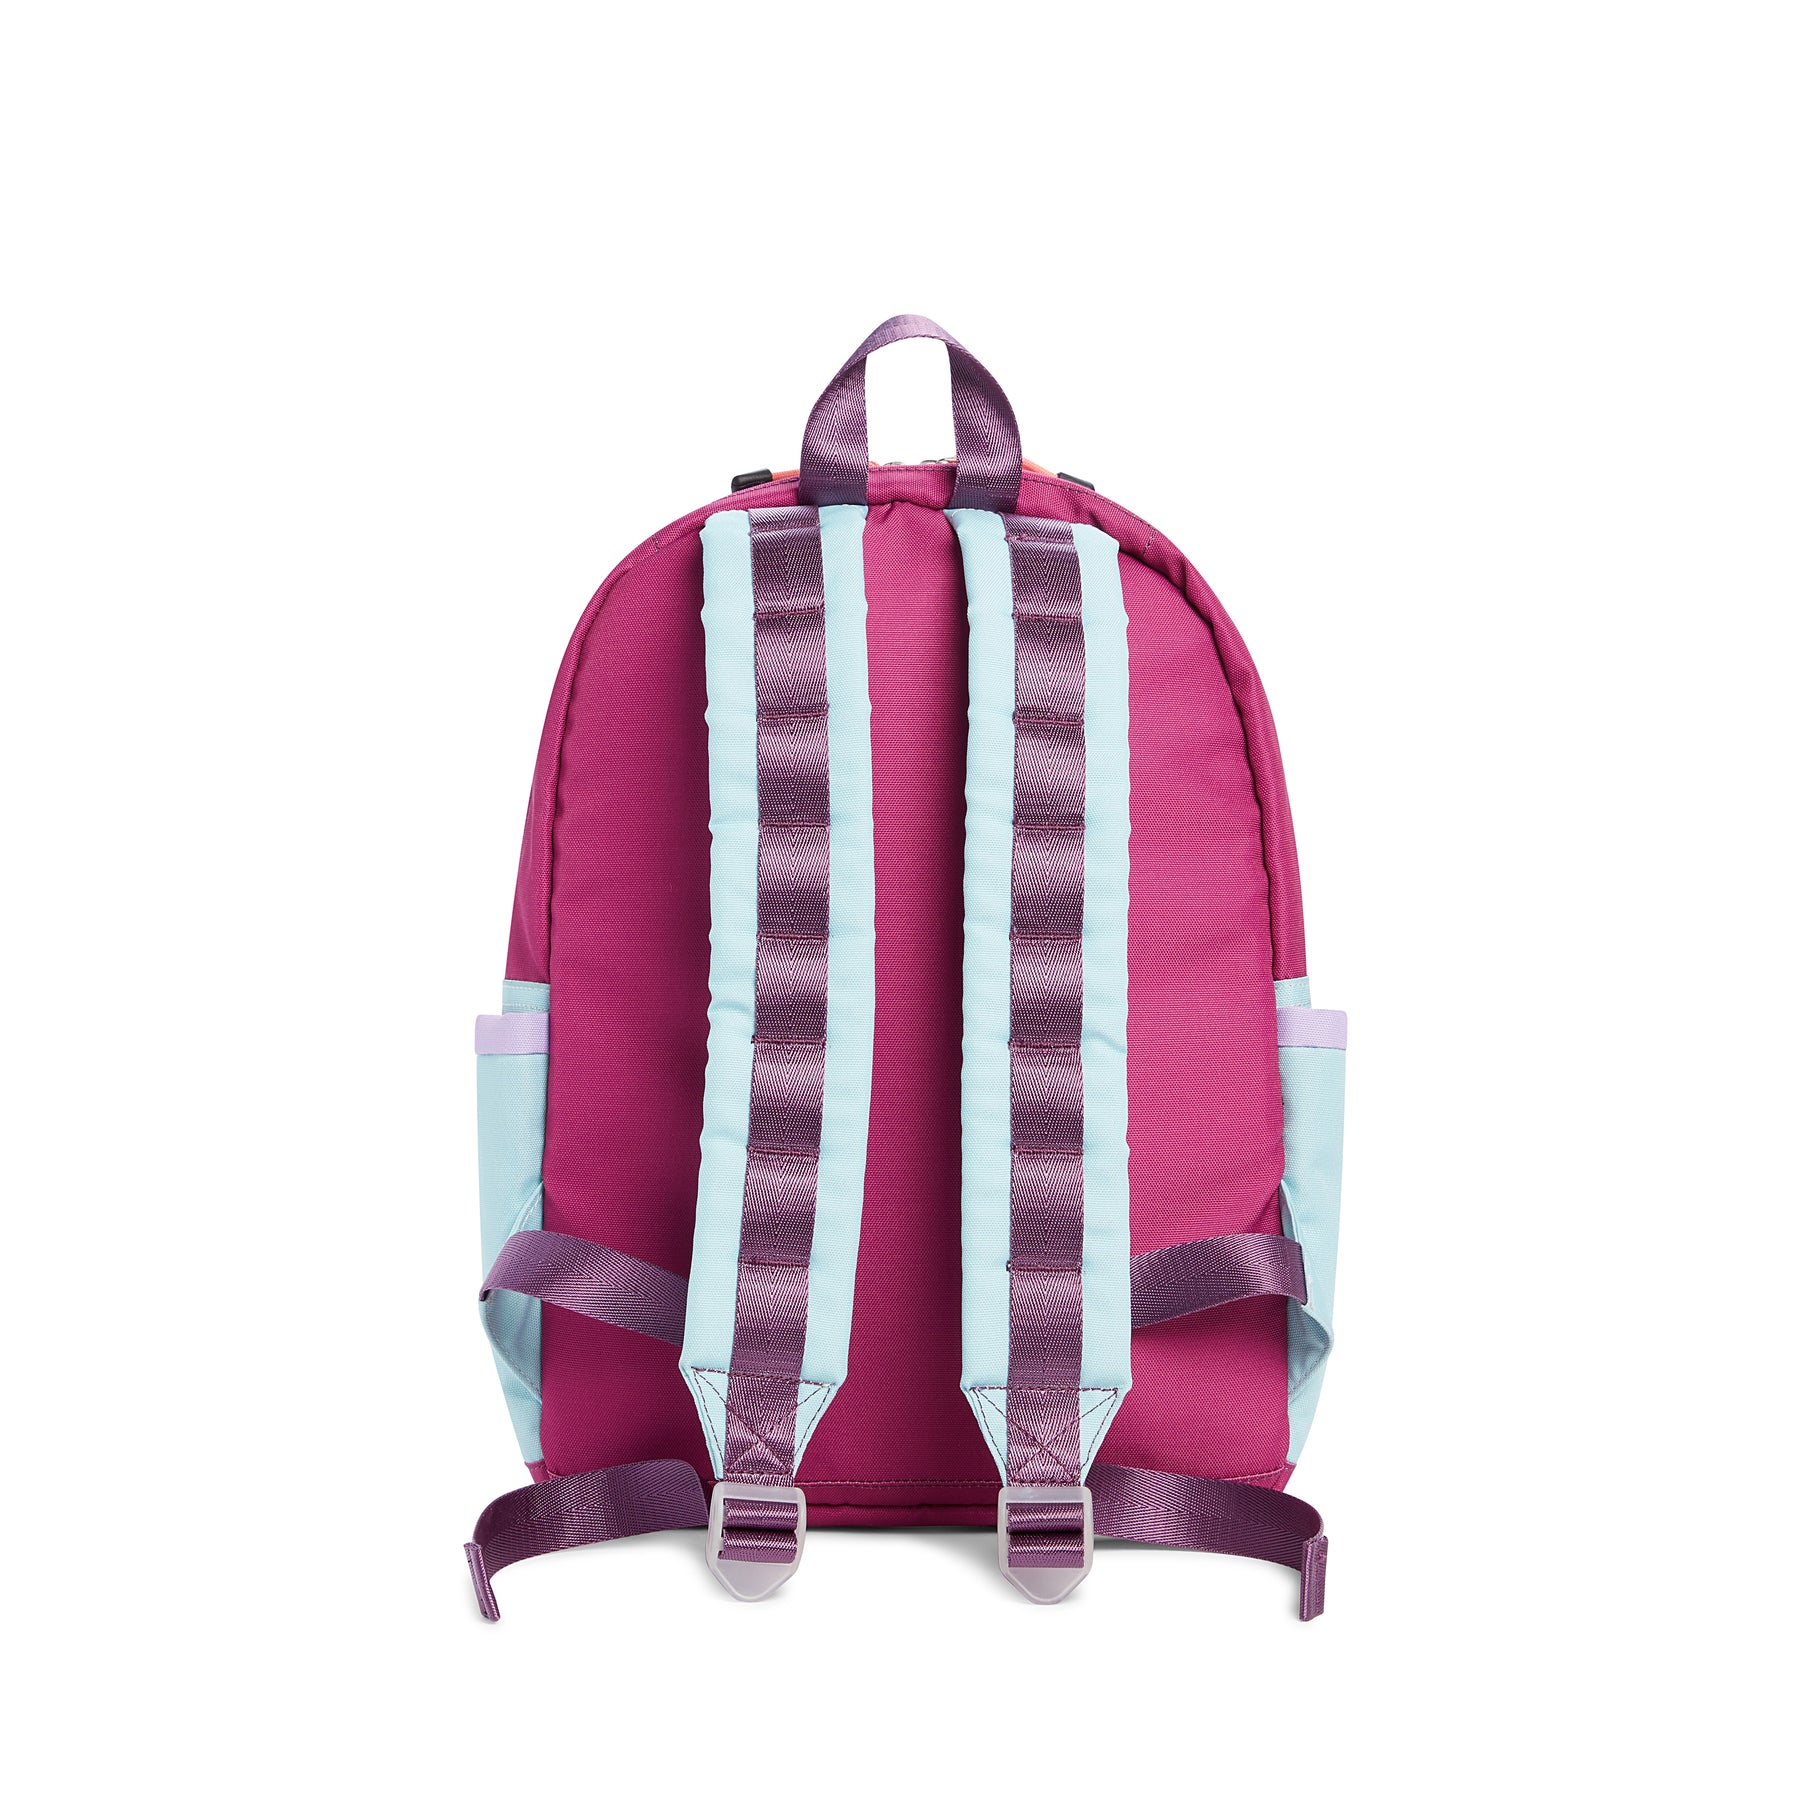 State Bags Kane Kids Mini Backpack in Pink/Mint